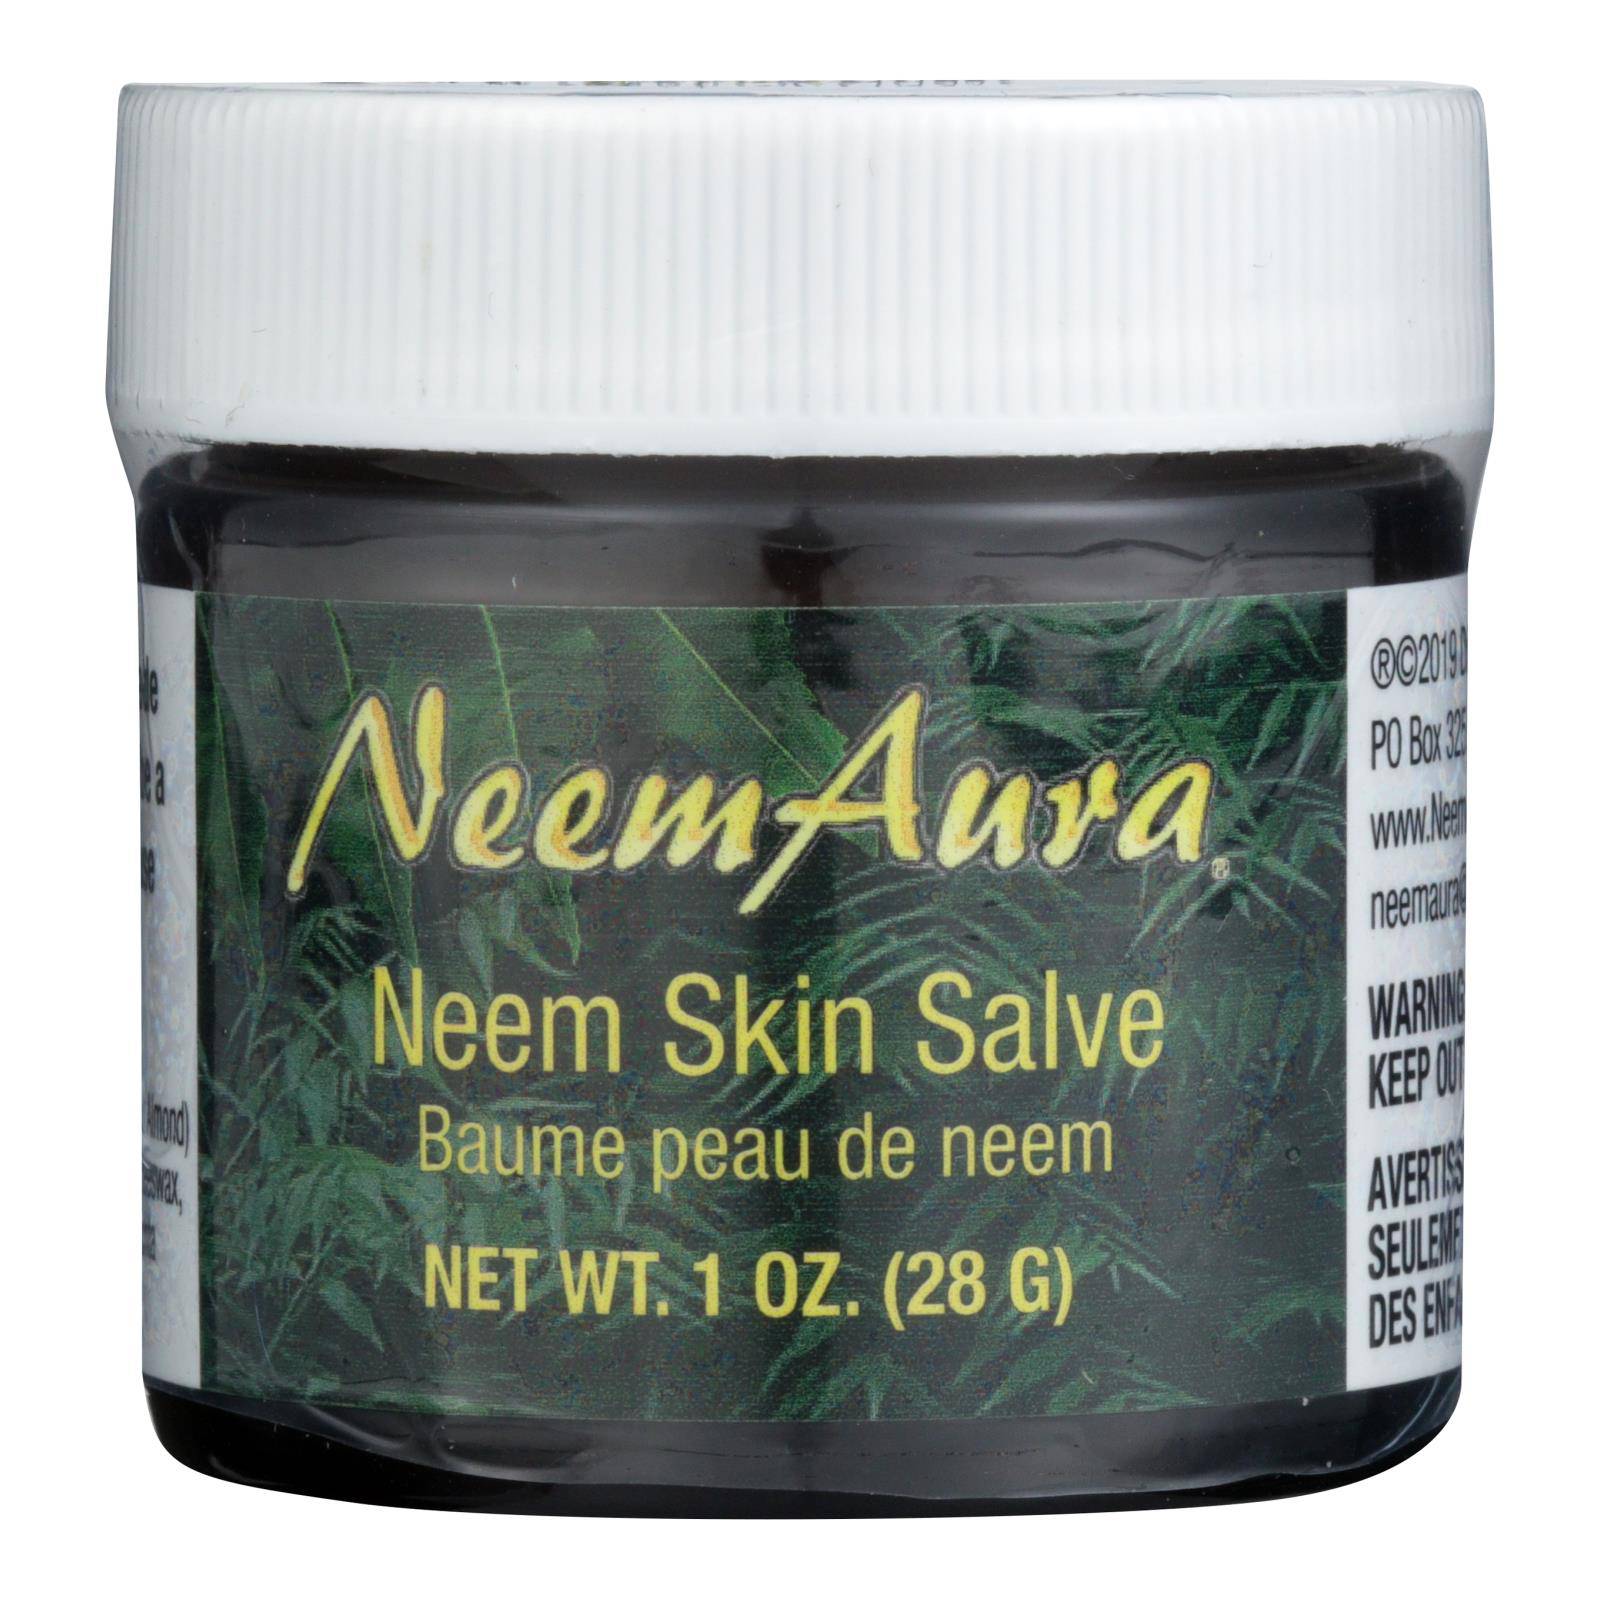 Buy Neem Aura Neem Skin Salve - 1 Oz  at OnlyNaturals.us